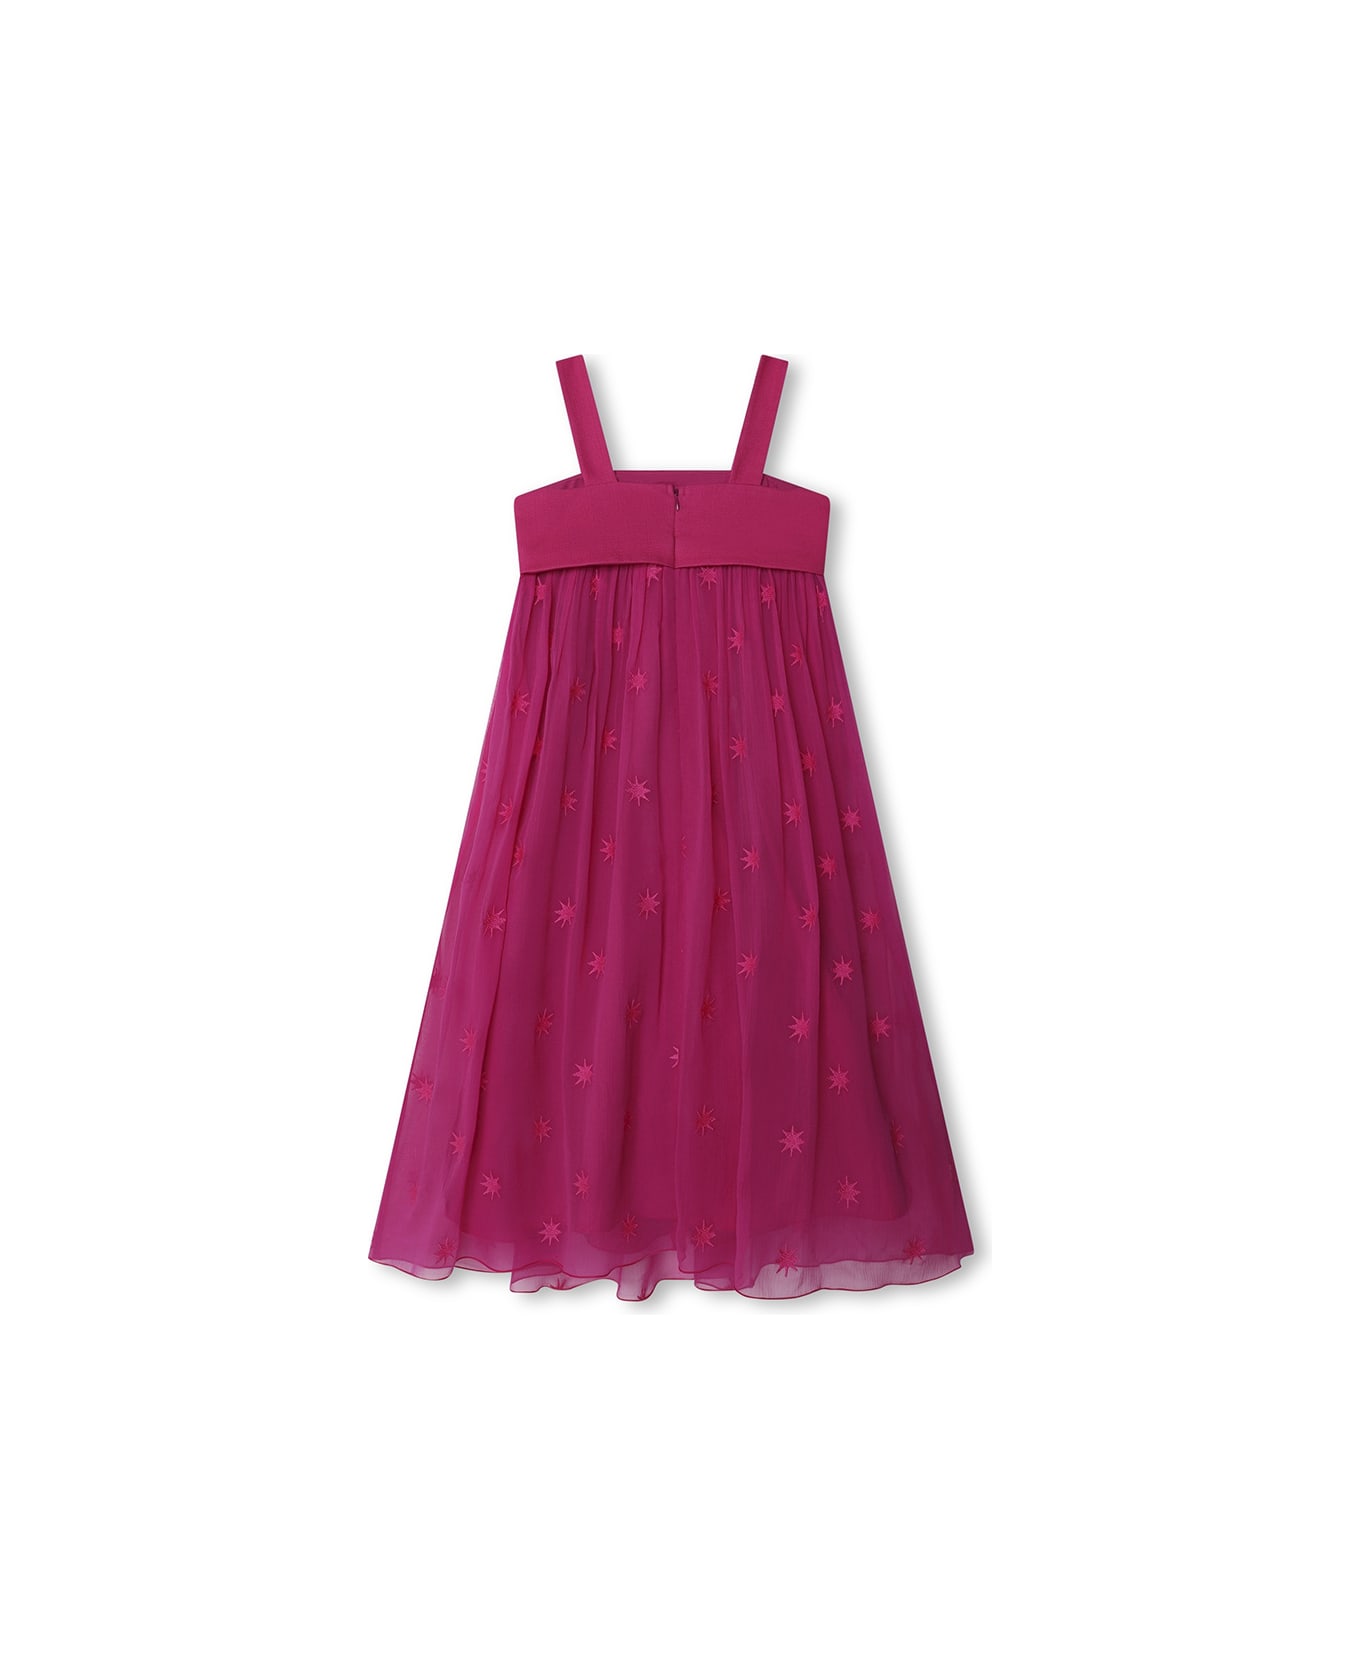 Chloé Fuchsia Silk Dress With Stars Embroidery - Pink